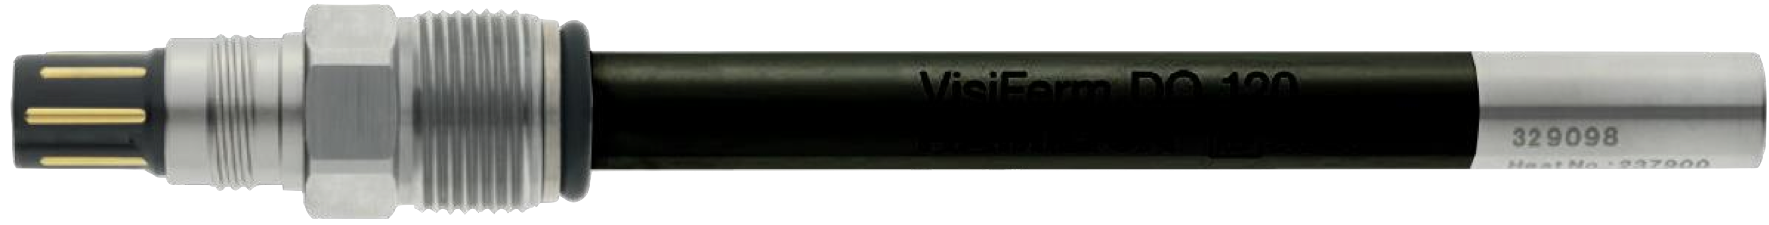 VisiWater DO VP 120 | 238999-4415 | Hamilton | 溶存酸素センサー